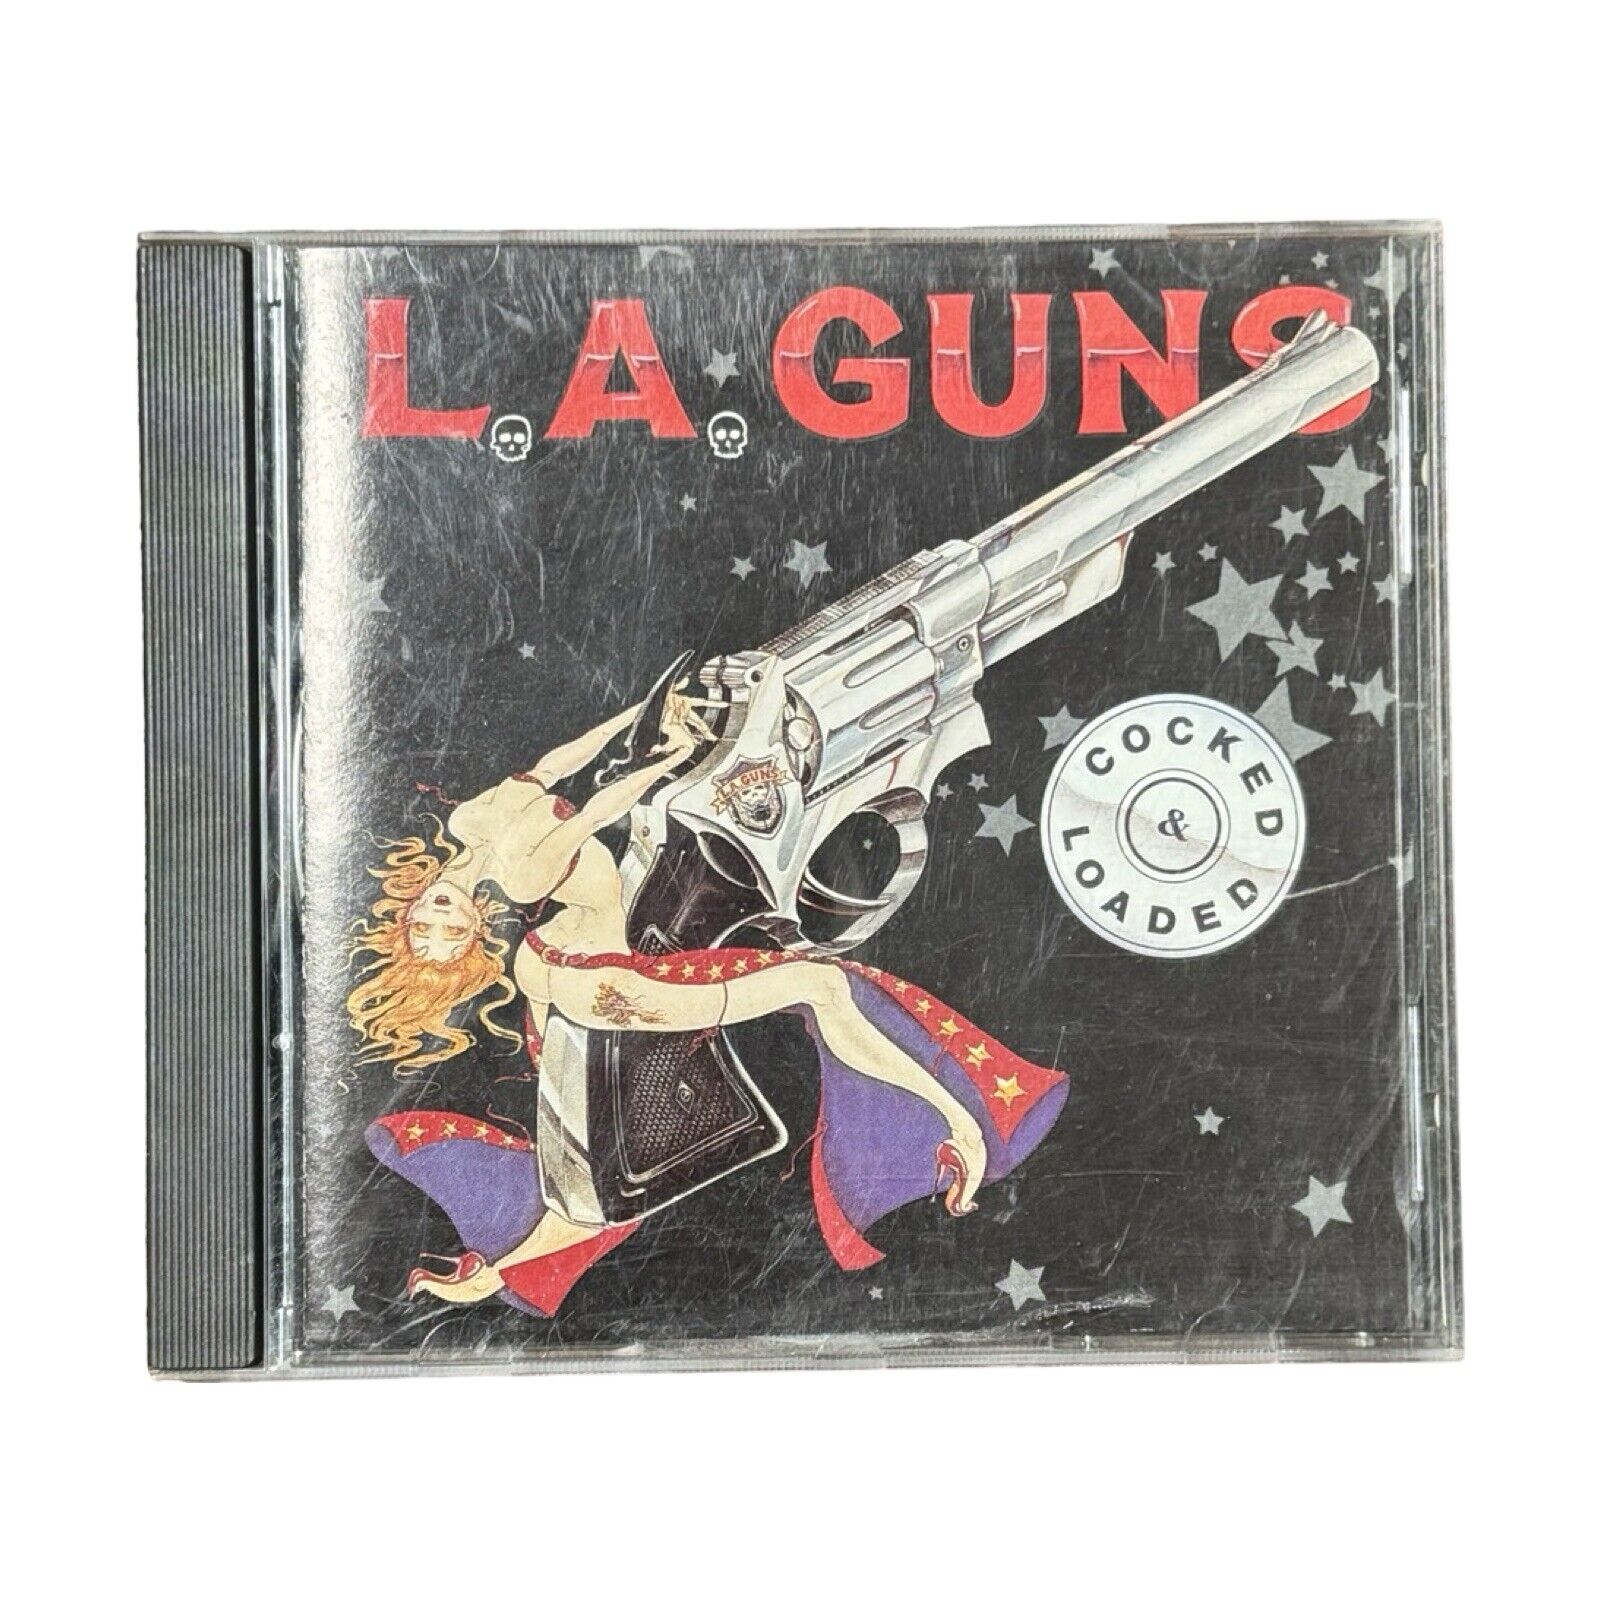 L.A. Guns Cocked & Loaded CD 1989 Used VG Vertigo PolyGram 838 592-2 MTV Hair